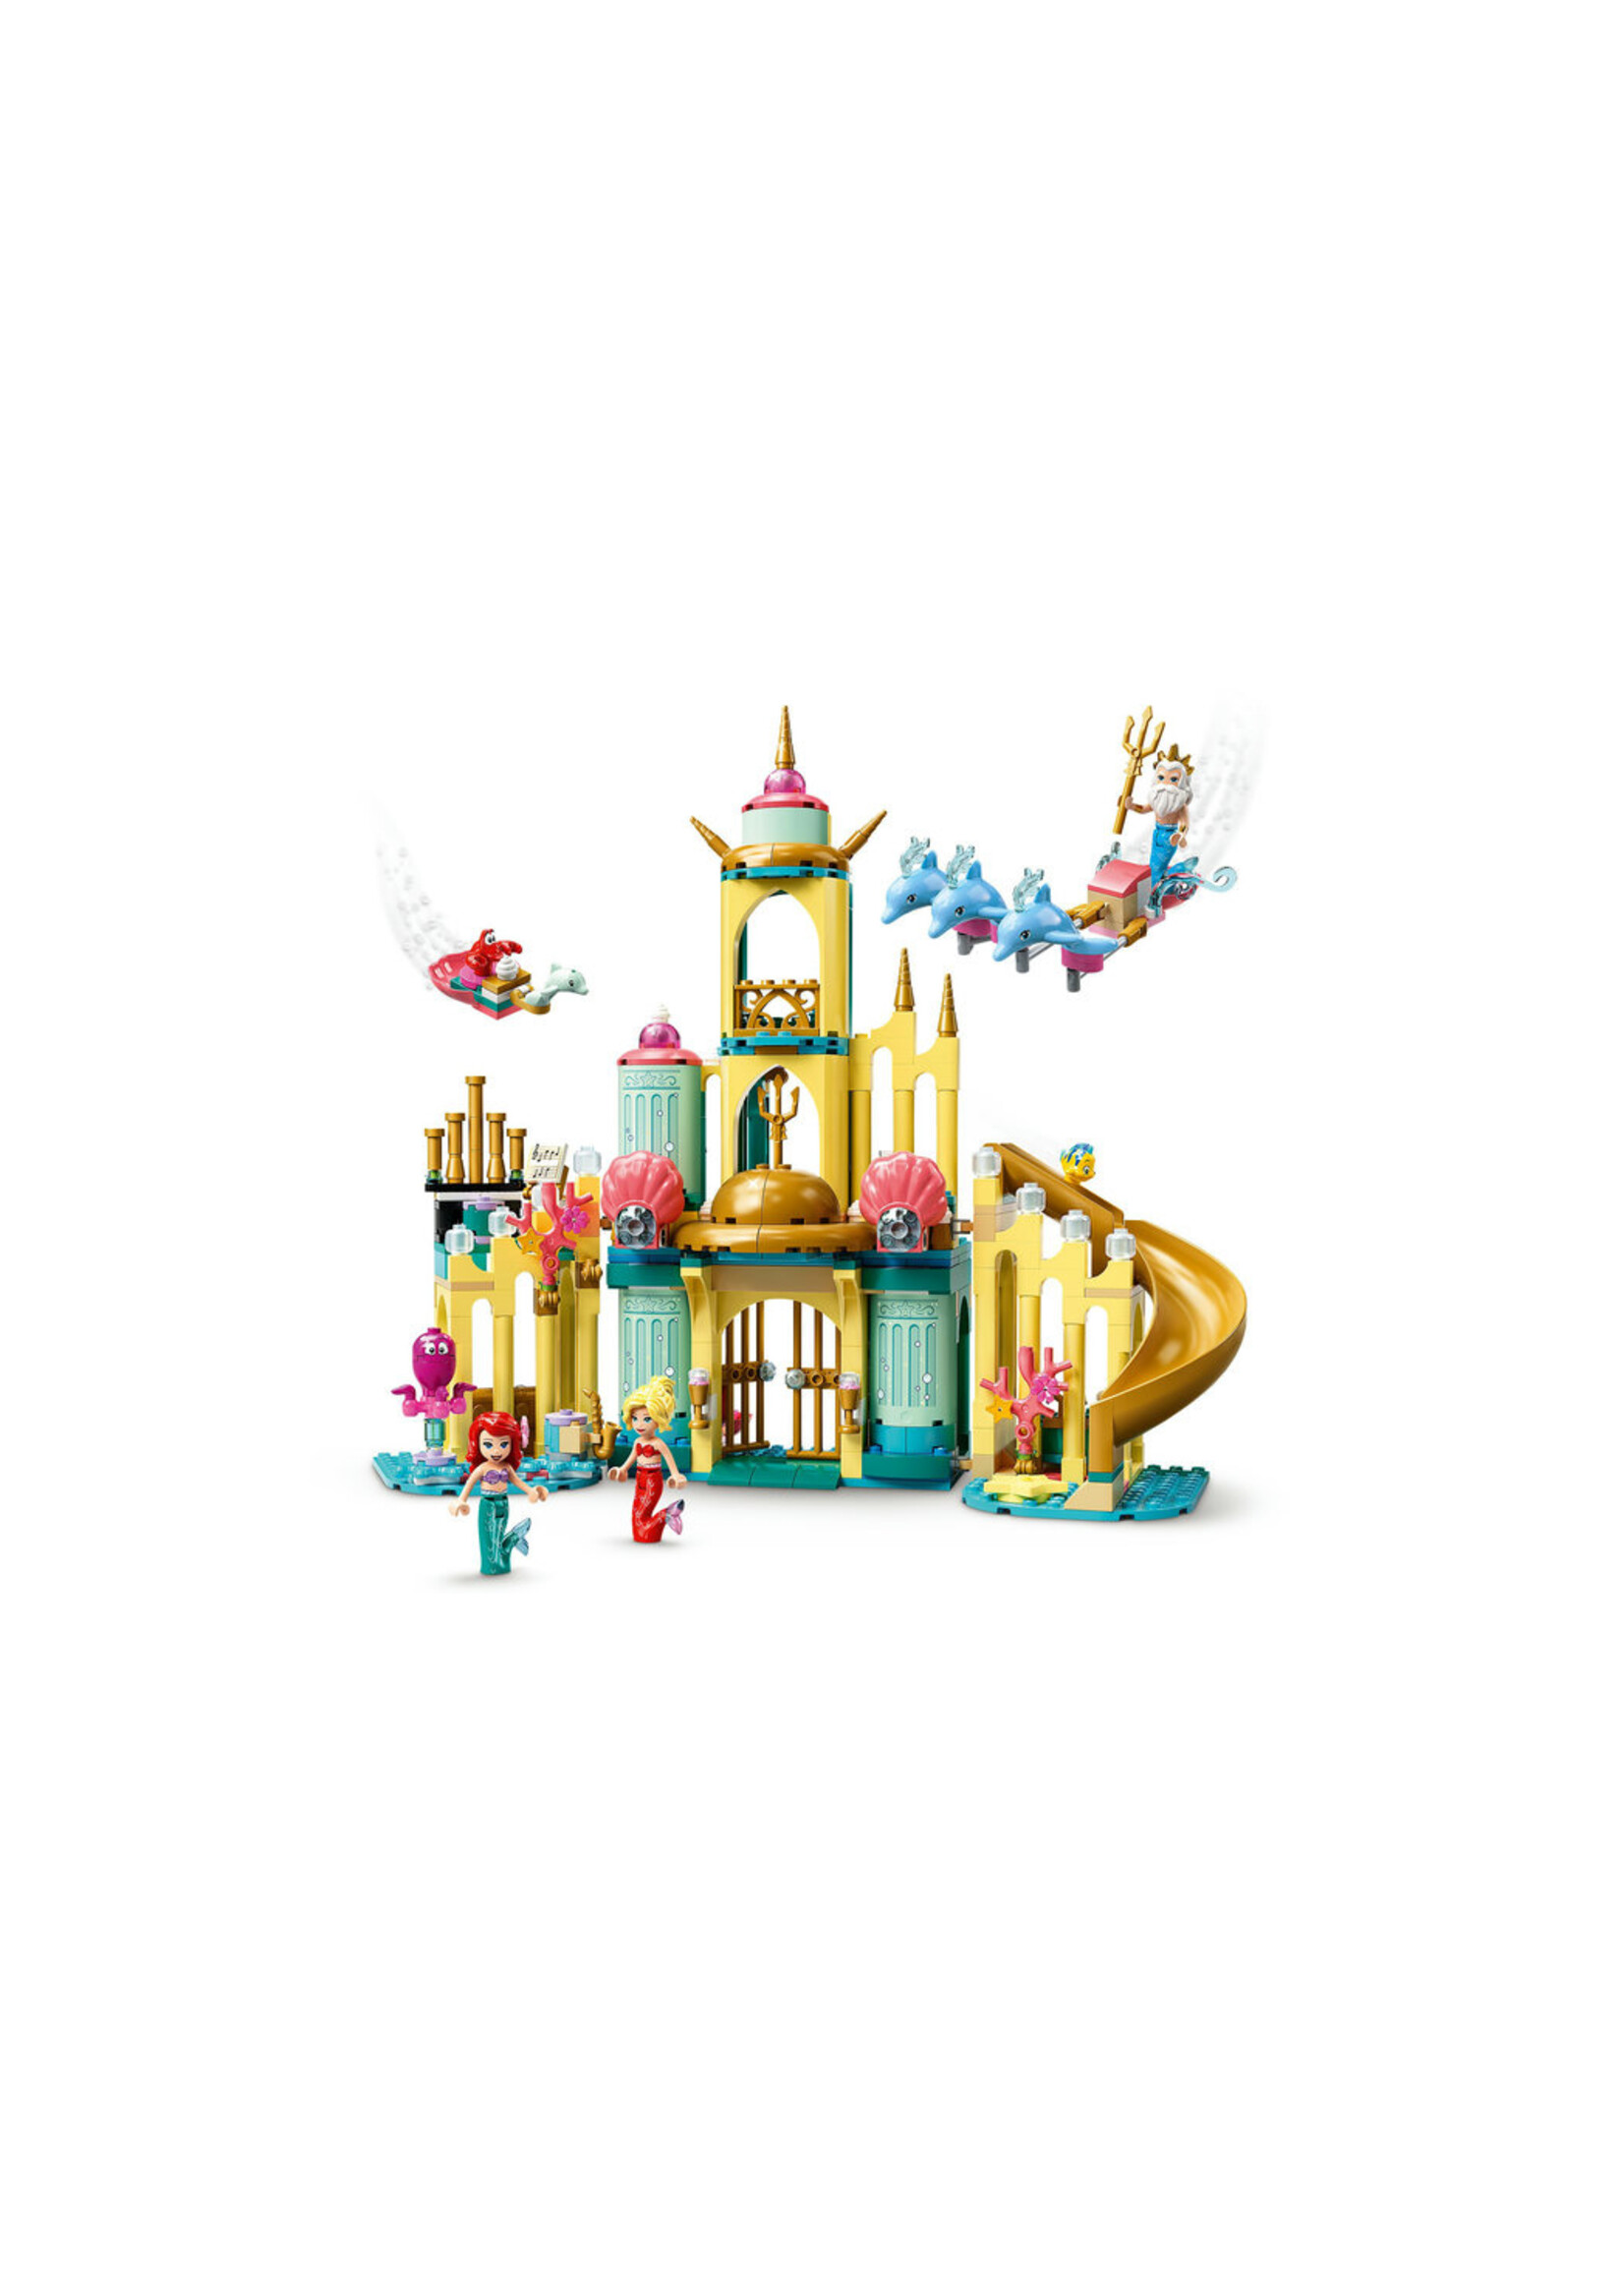 LEGO 43207 - Ariel's Underwater Palace